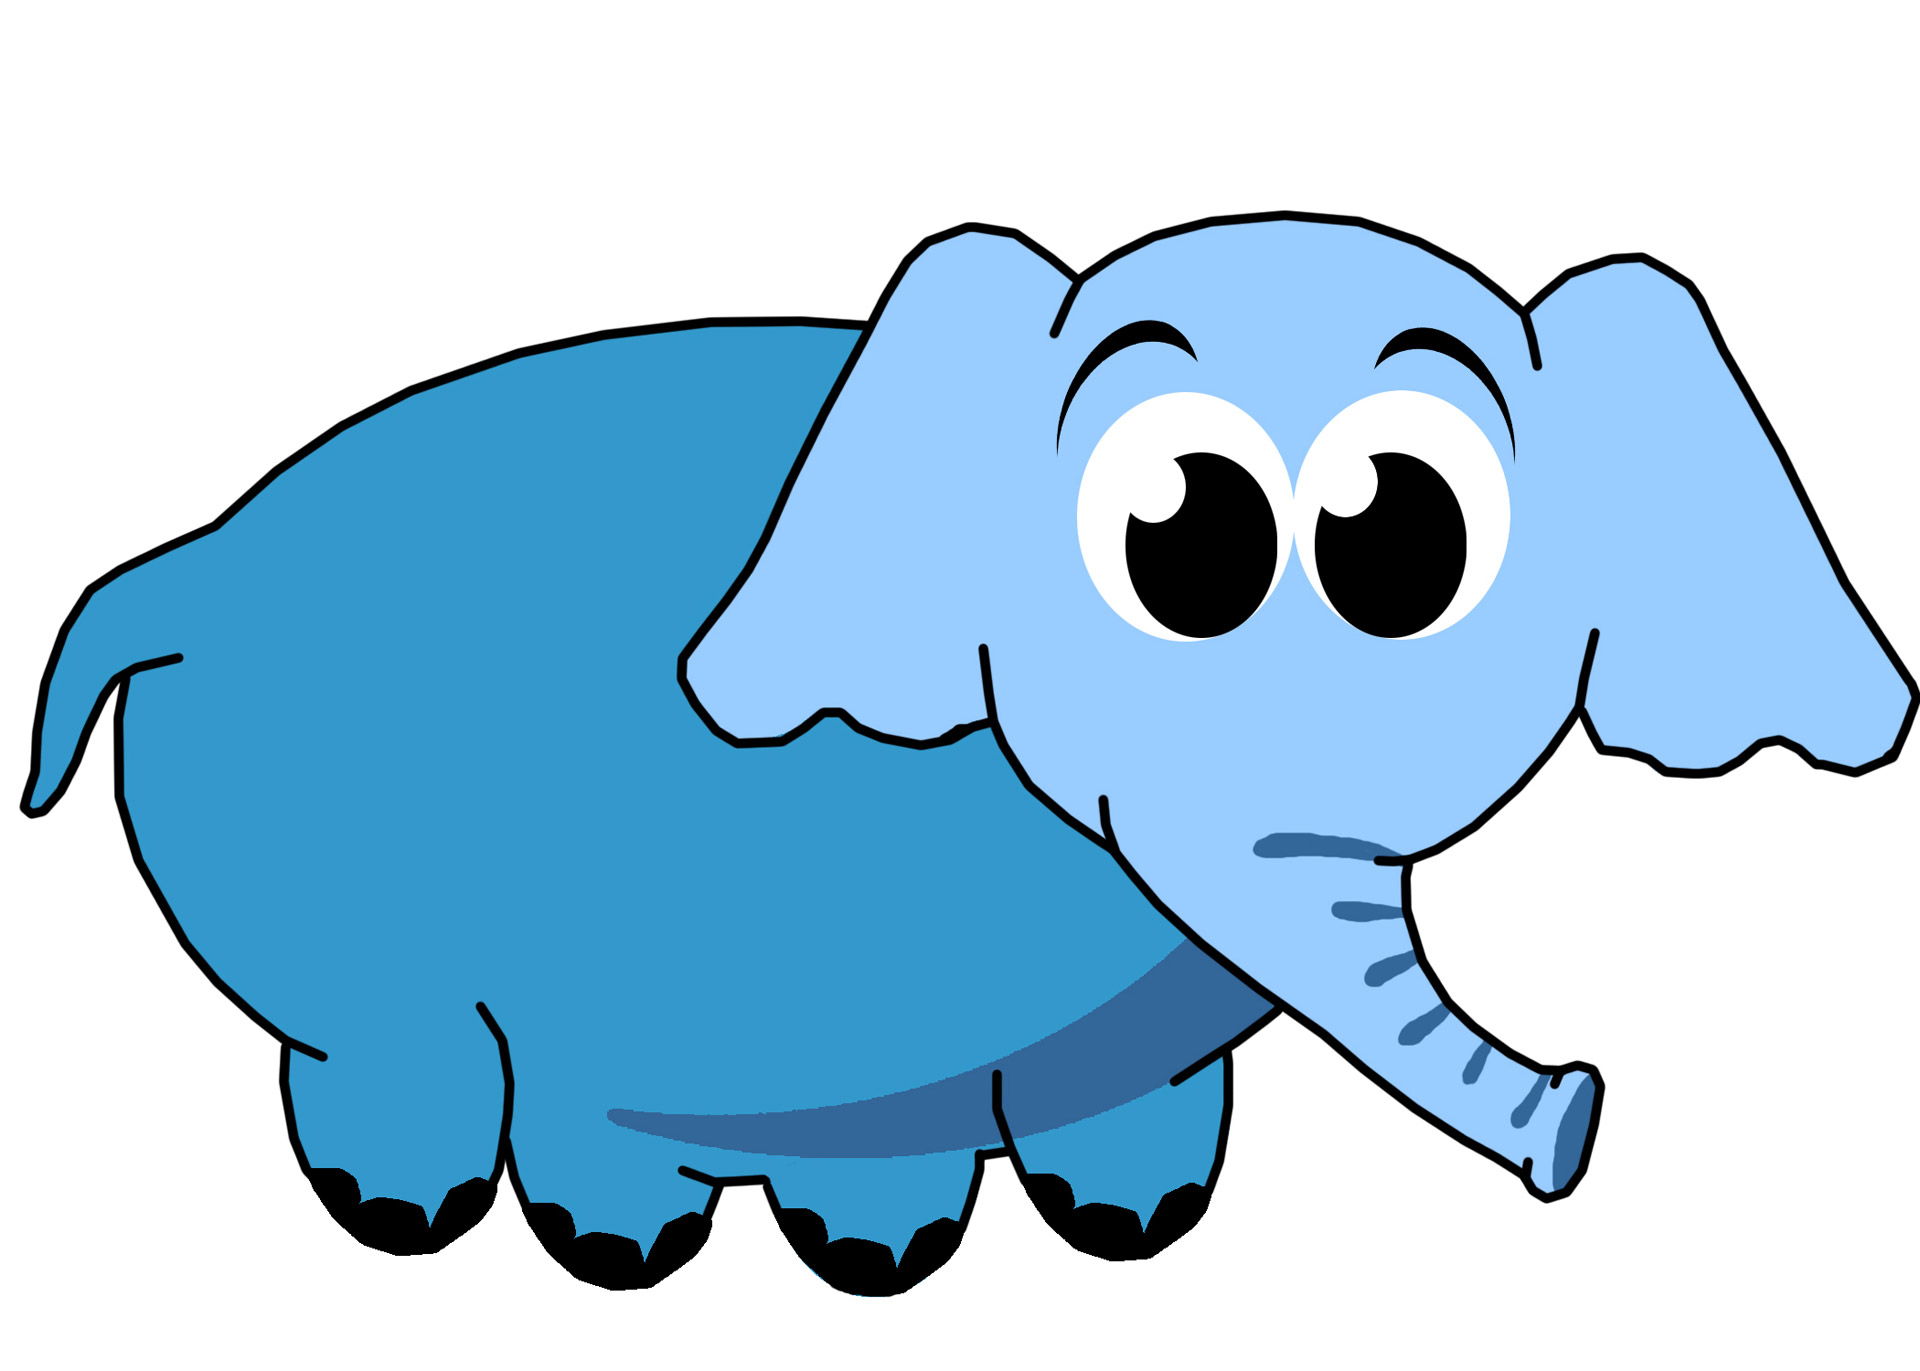 Blue elephant clipart - ClipartFox